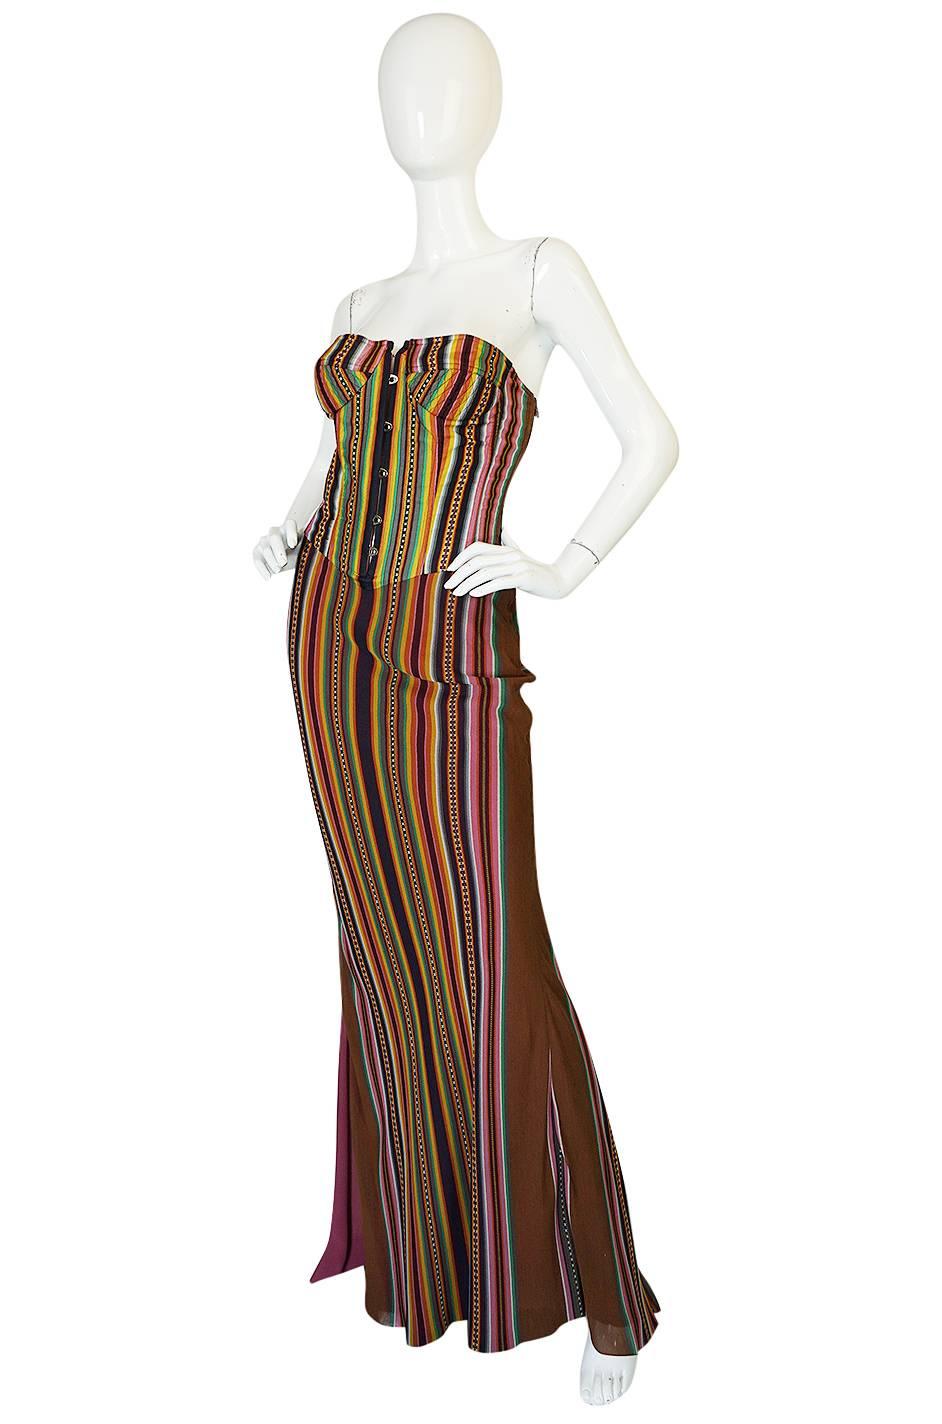 Brown S/S 2002 Galliano for Christian Dior Striped Corset Dress